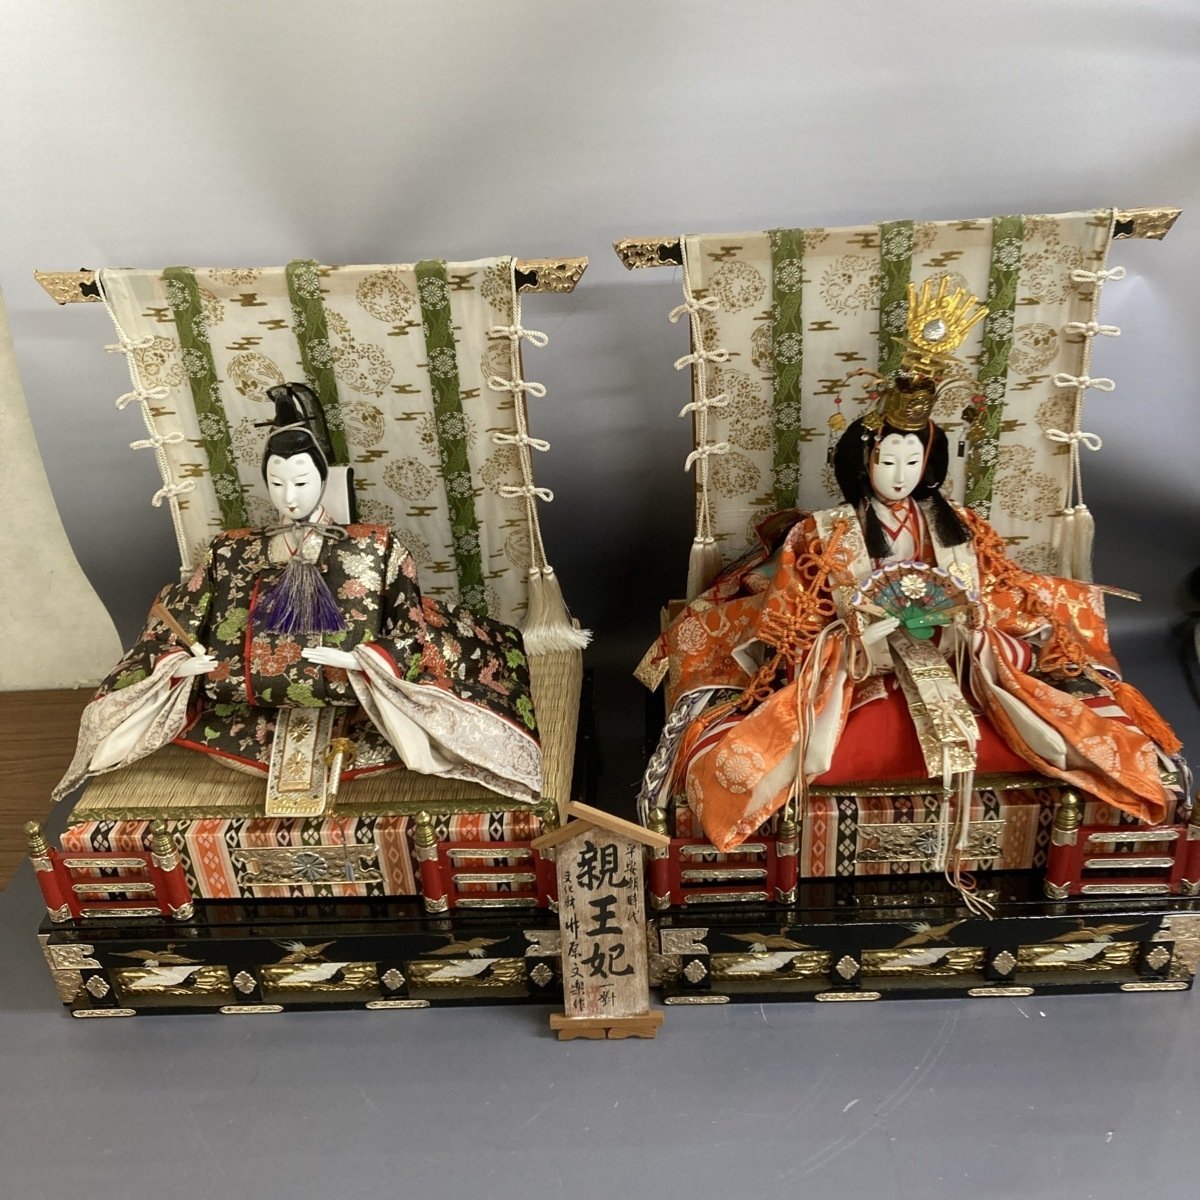 f001 F Pick-up only Takehara Bunraku work Heian period Prince and Princess pair of Hina dolls, season, Annual Events, Doll's Festival, Hina Dolls